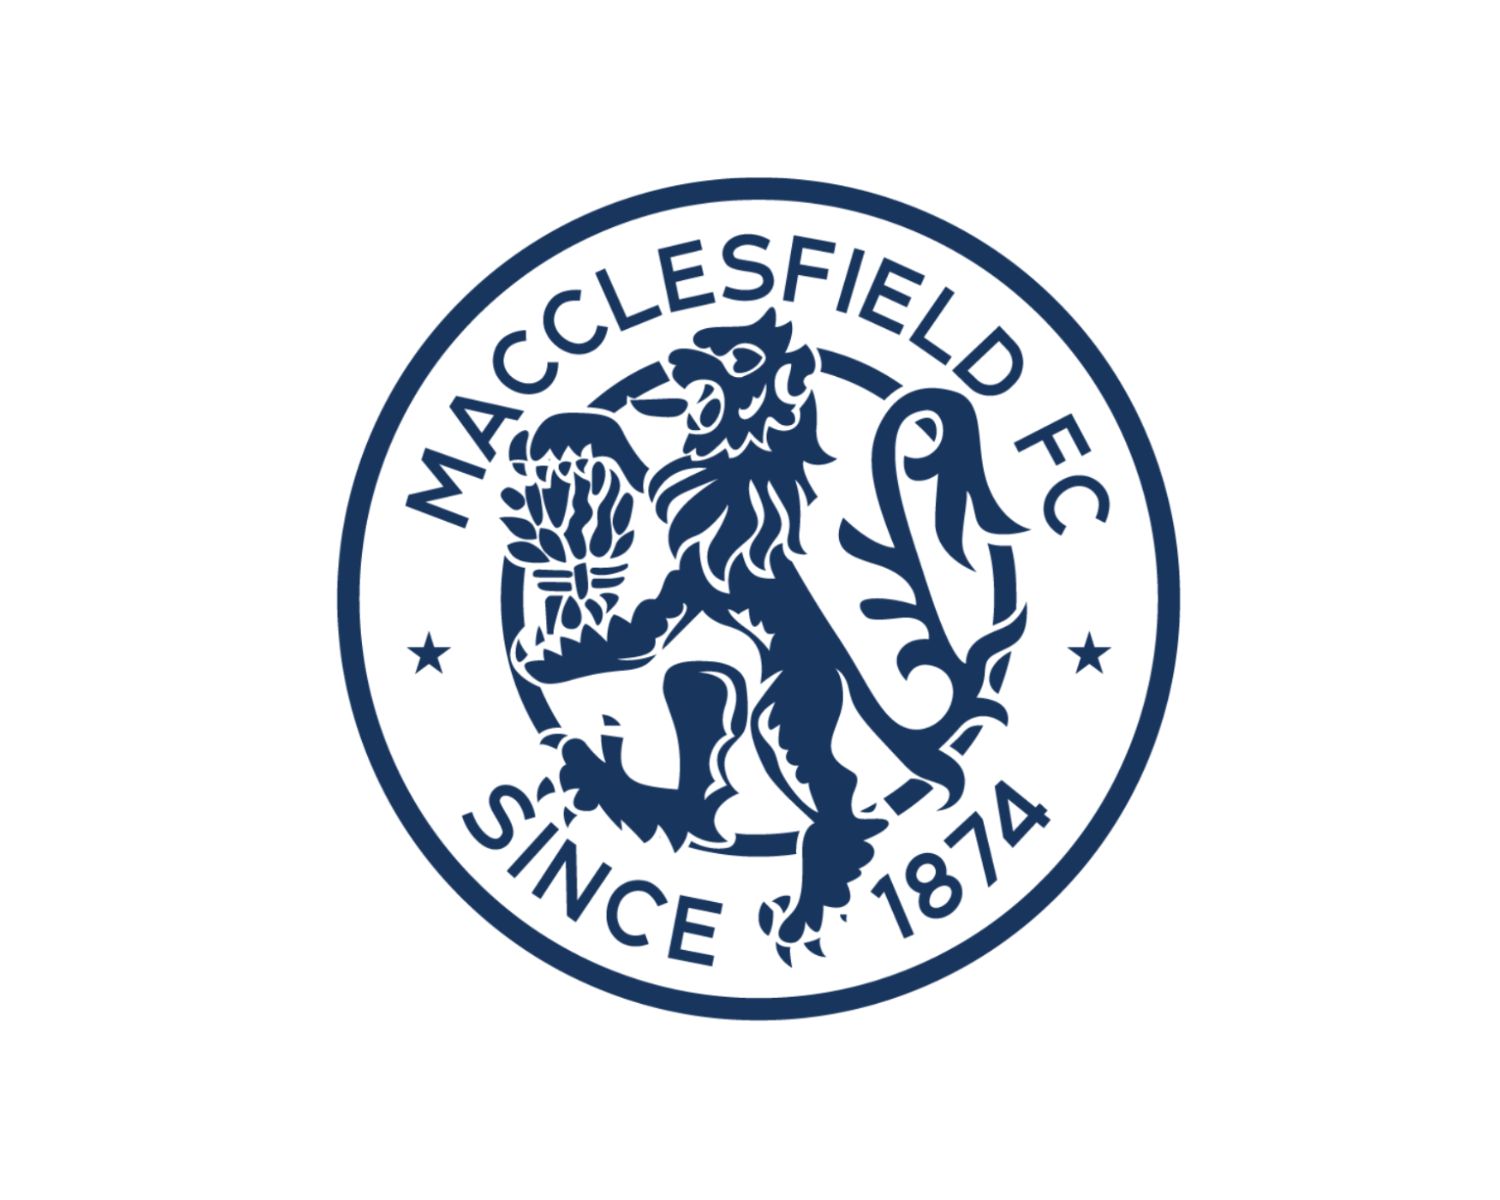 macclesfield-town-fc-13-football-club-facts